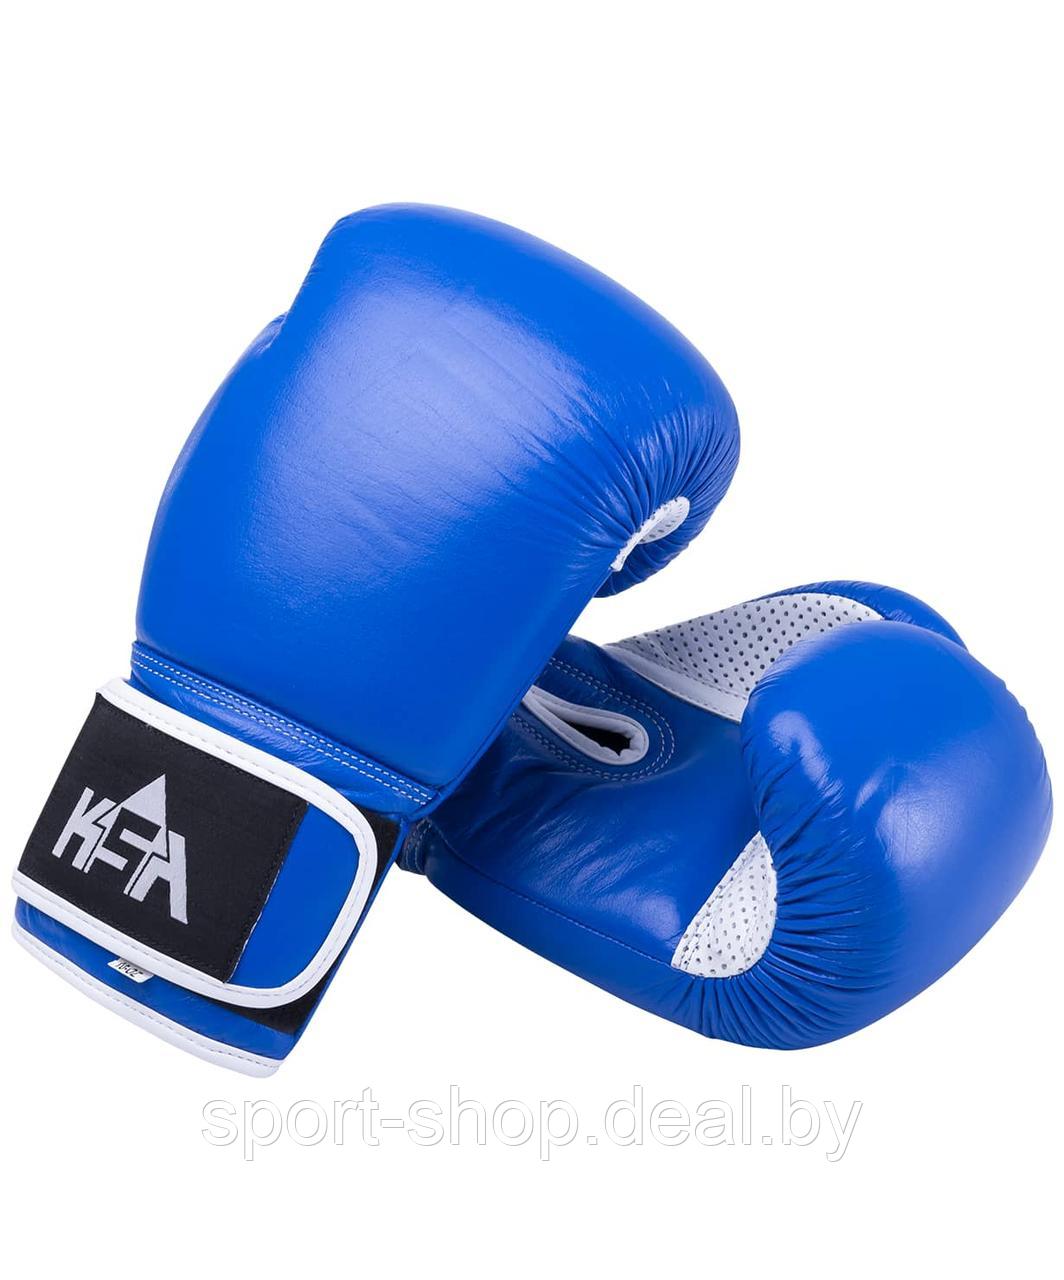 Боксерские перчатки KSA Wolf Blue Кожа (10oz),перчатки для бокса,перчатки 10 унций,перчатки боксерские детские